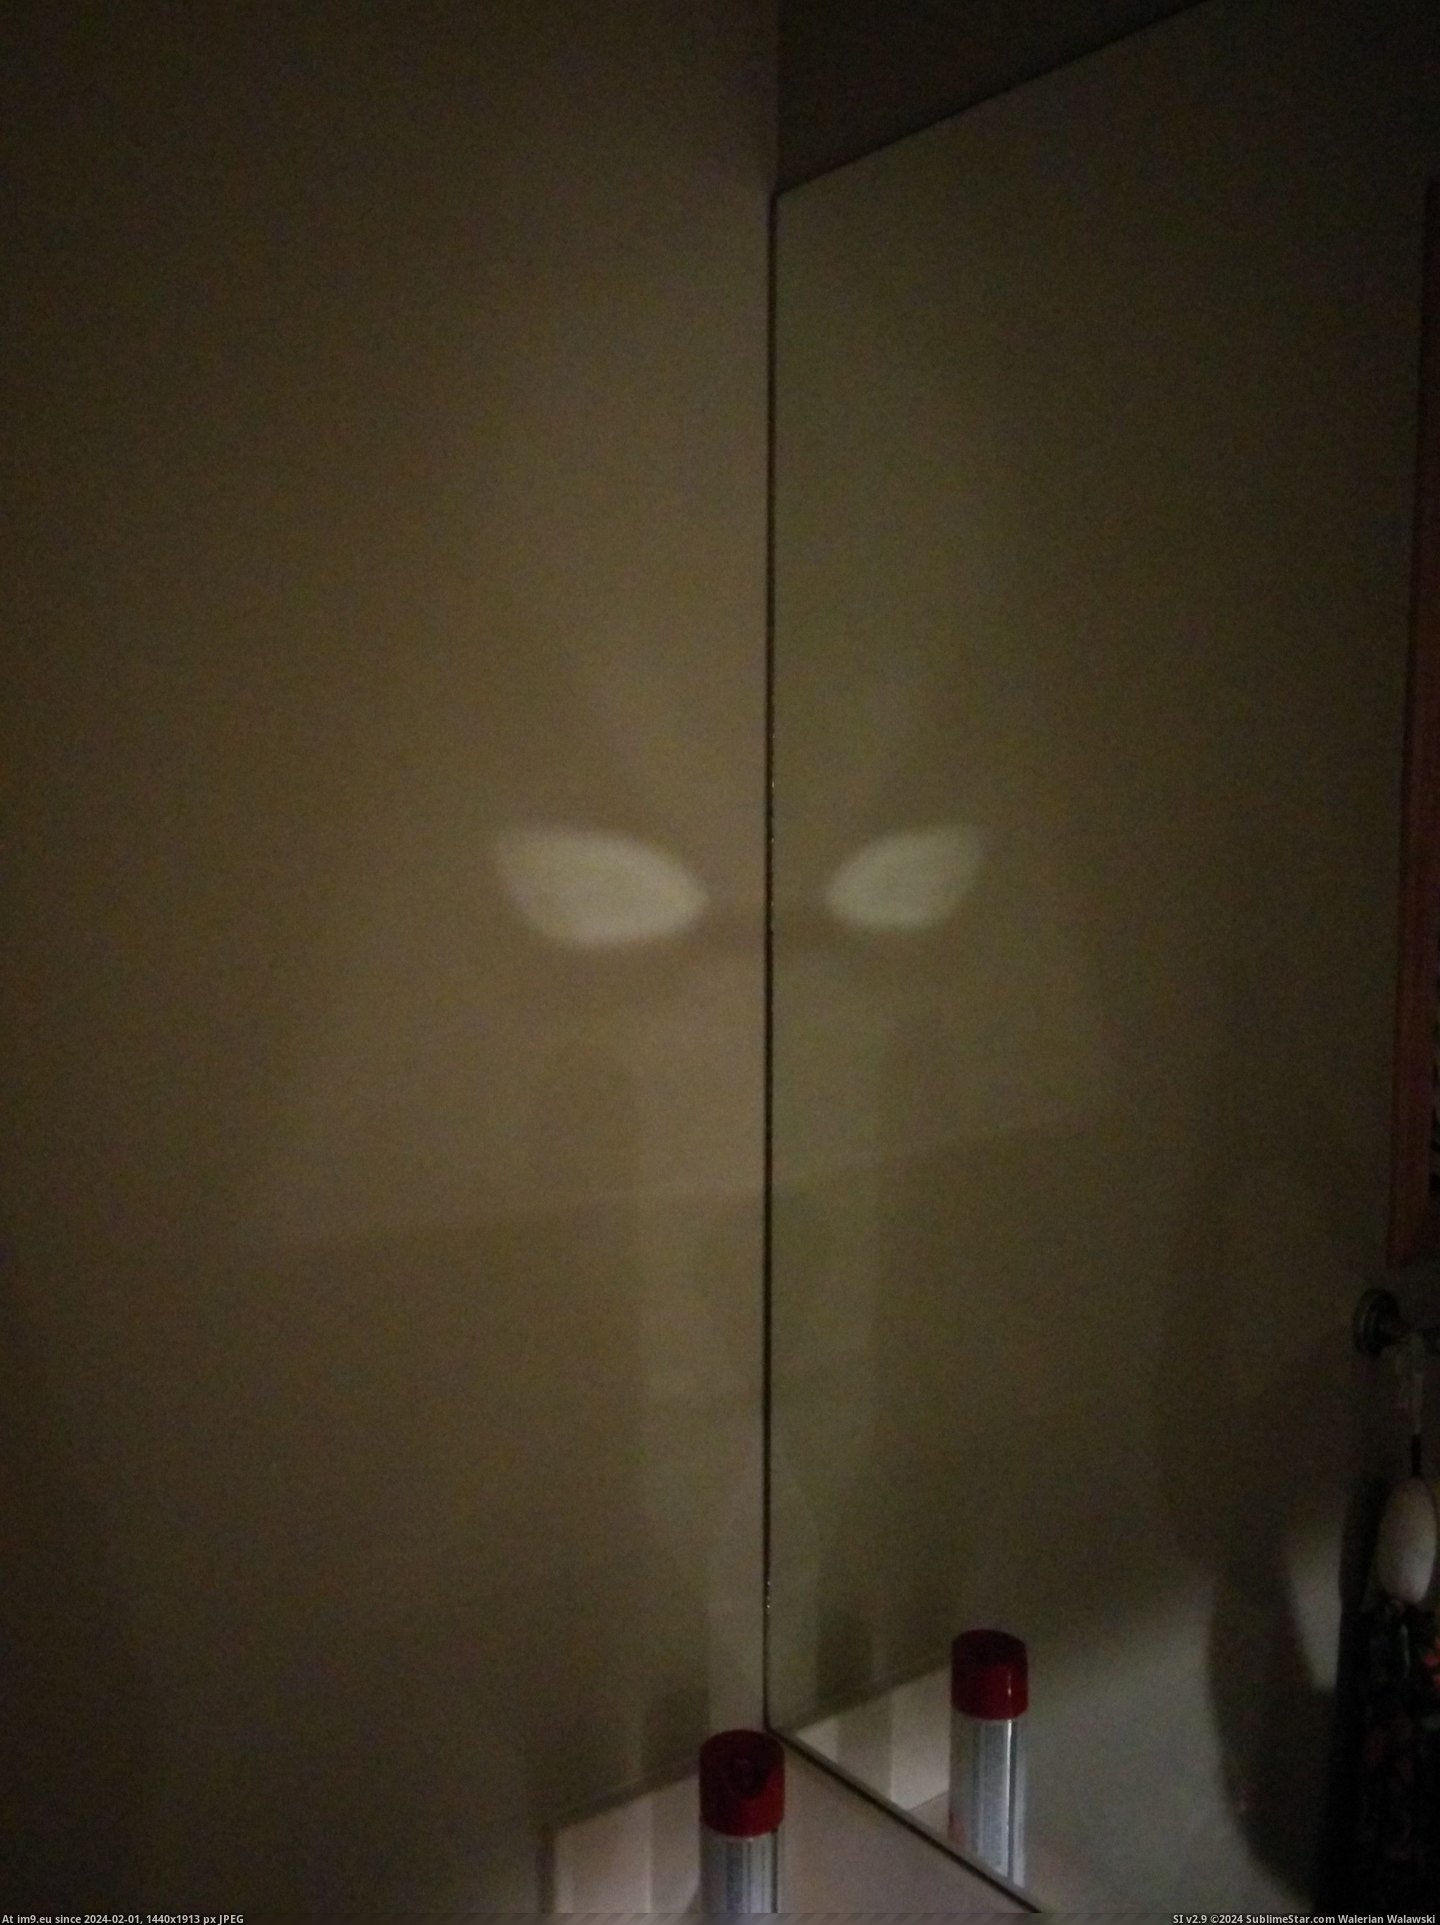 #Mirror #Bathroom #Darth #Vader #Wall #Reflection [Mildlyinteresting] Darth Vader reflection the bathroom mirror made against the wall Pic. (Obraz z album My r/MILDLYINTERESTING favs))